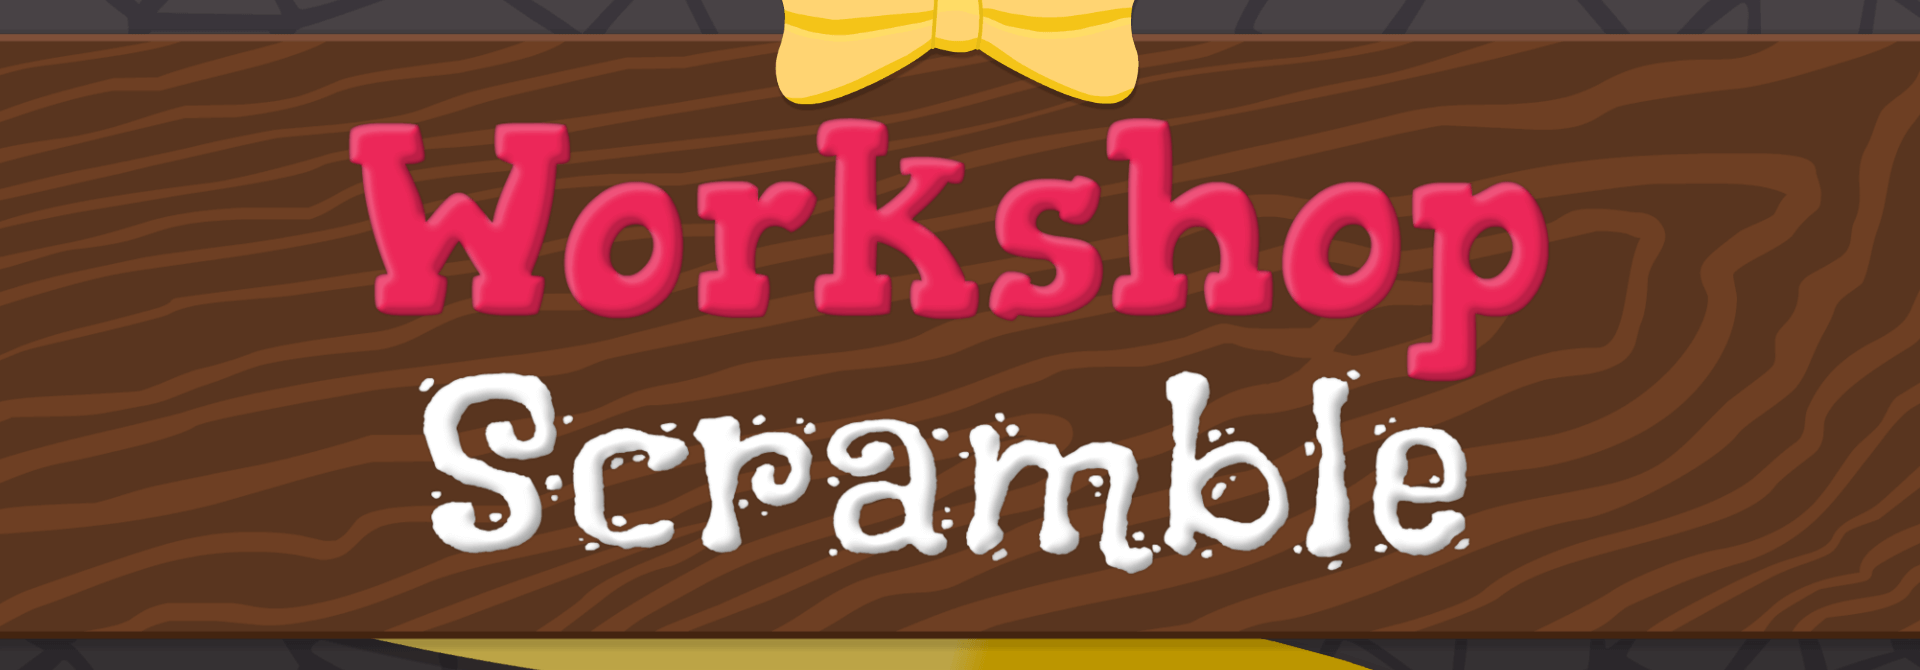 Workshop Scramble title